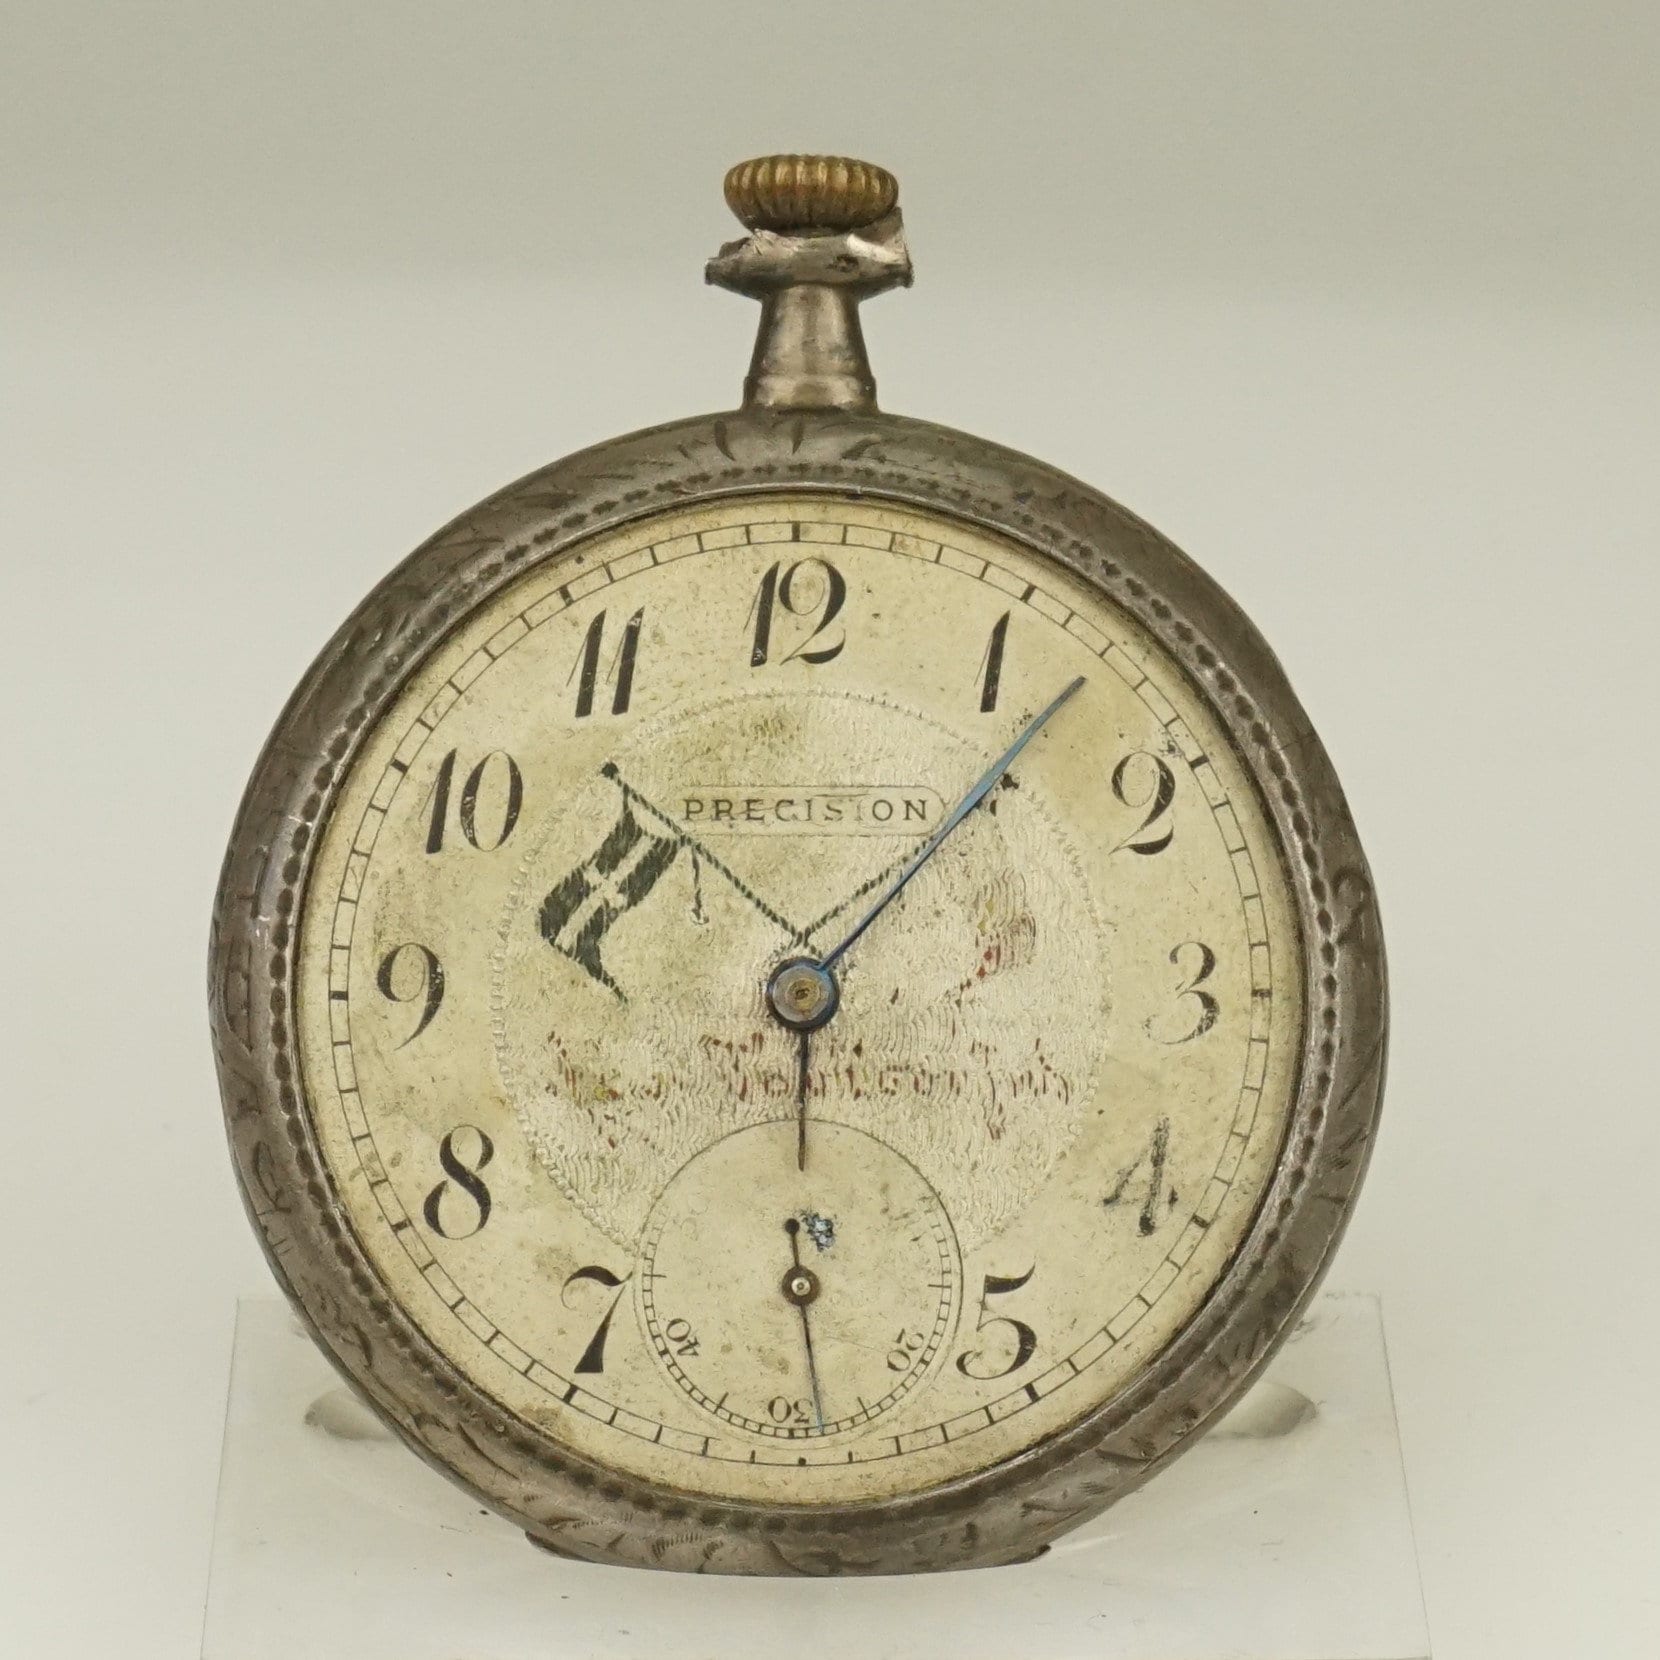 ⇨ Reloj Tissot de bolsillo en plata y mecanismo de cuerda, T83145213.